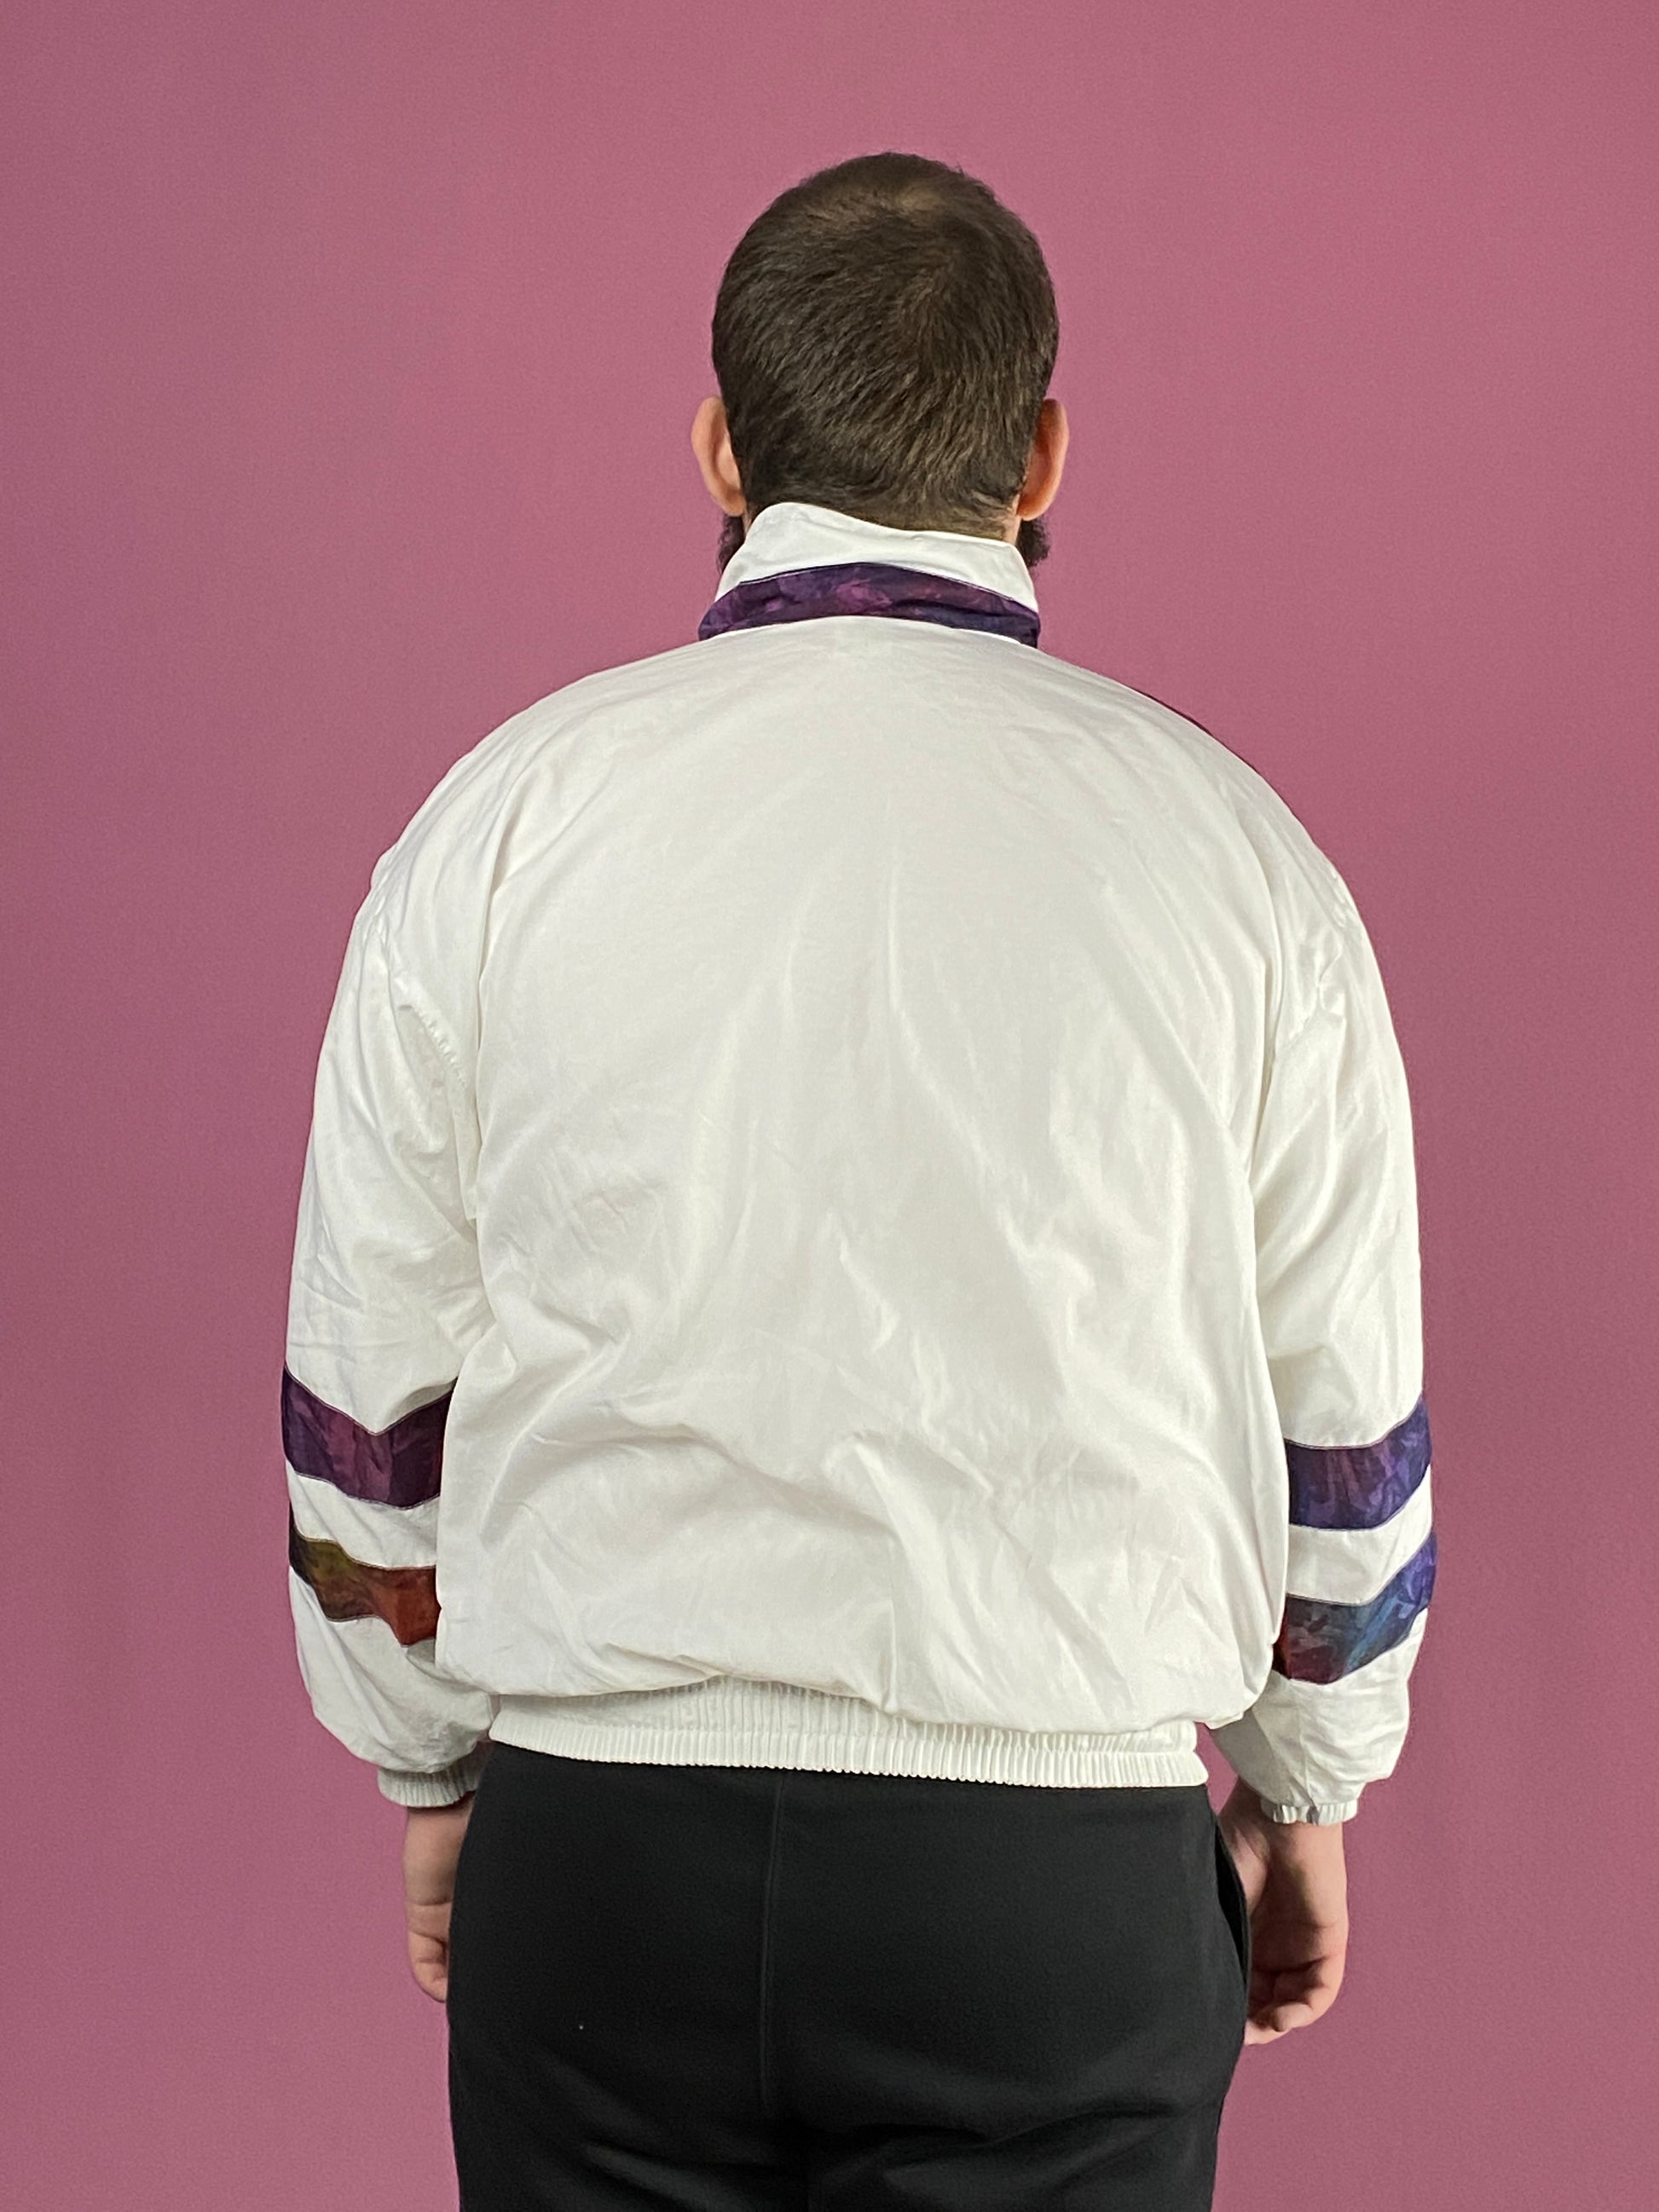 90s Vintage Men's Windbreaker Jacket - Medium White Polyester